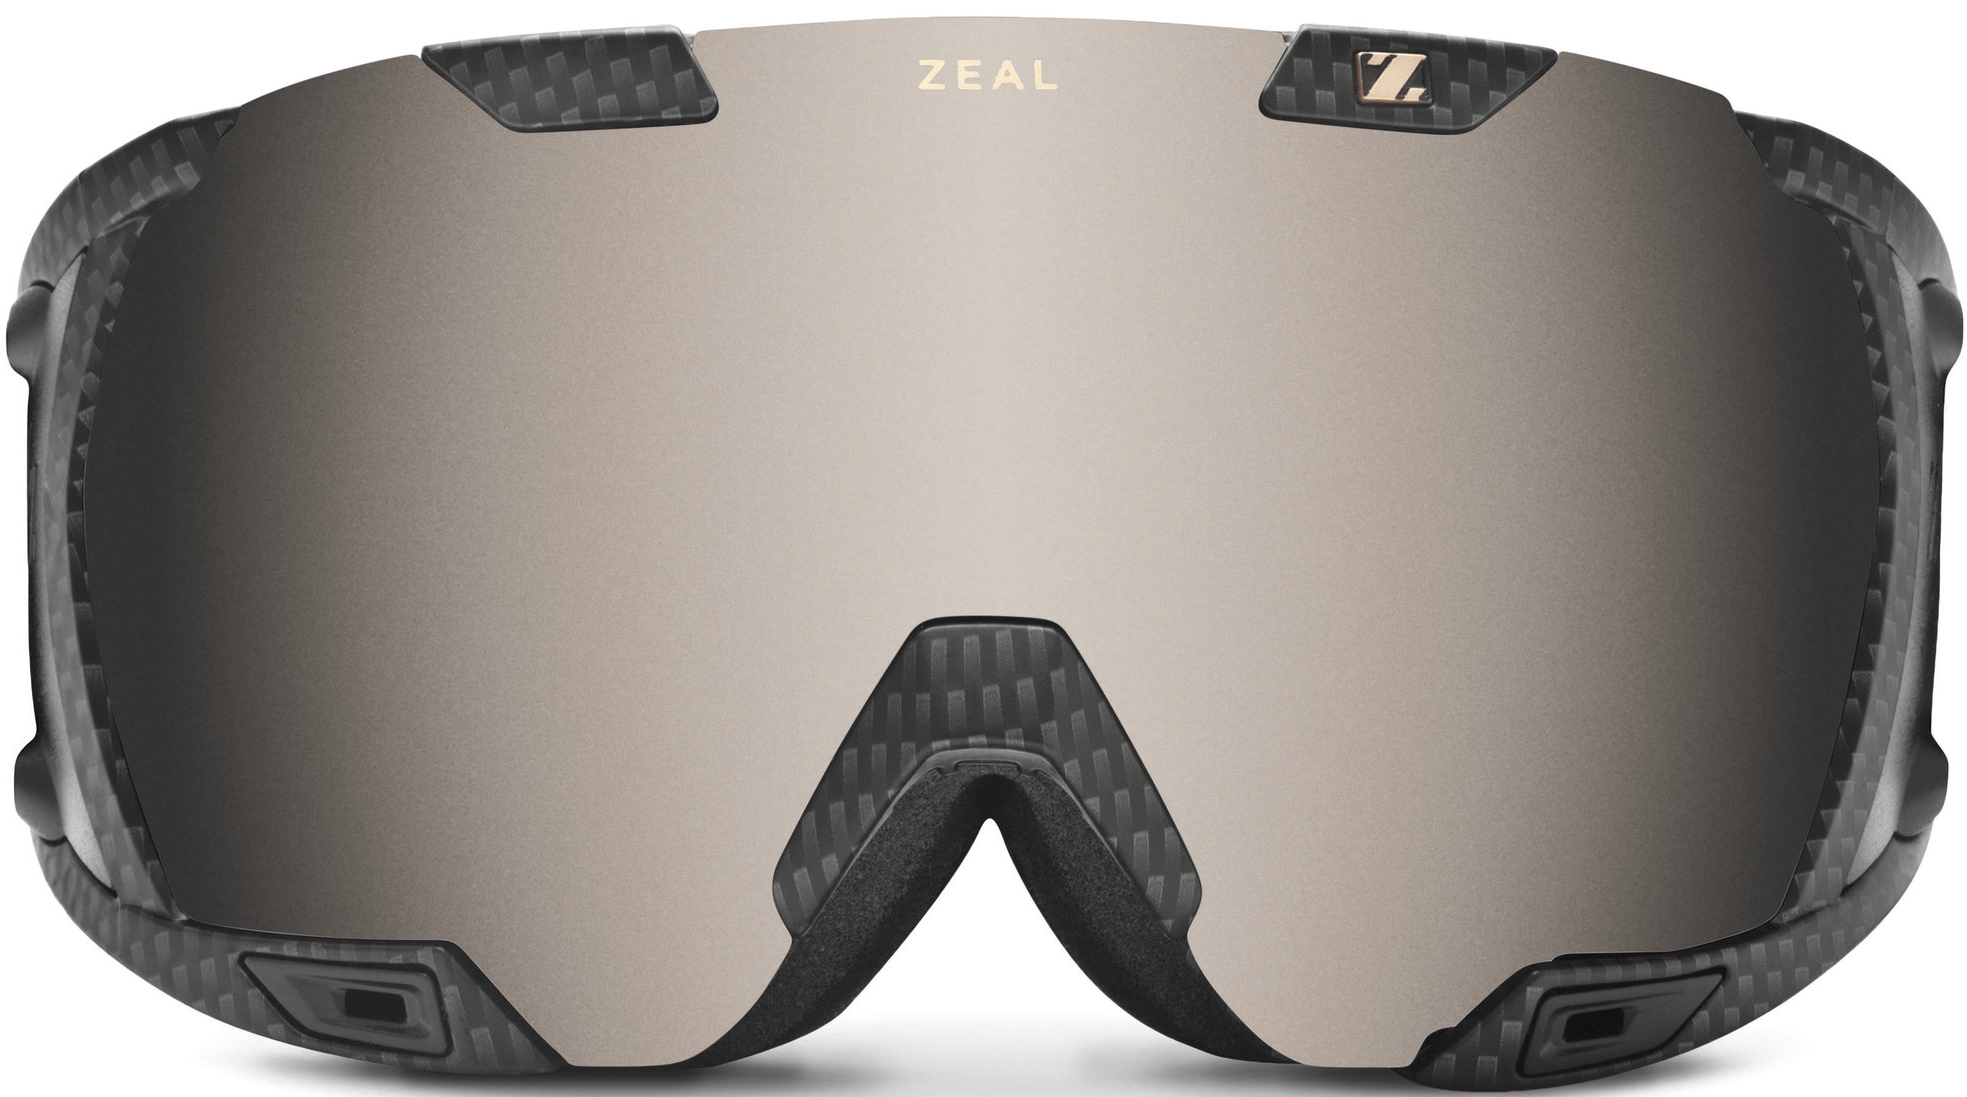 Zeal Z3 GPS Goggles, $99